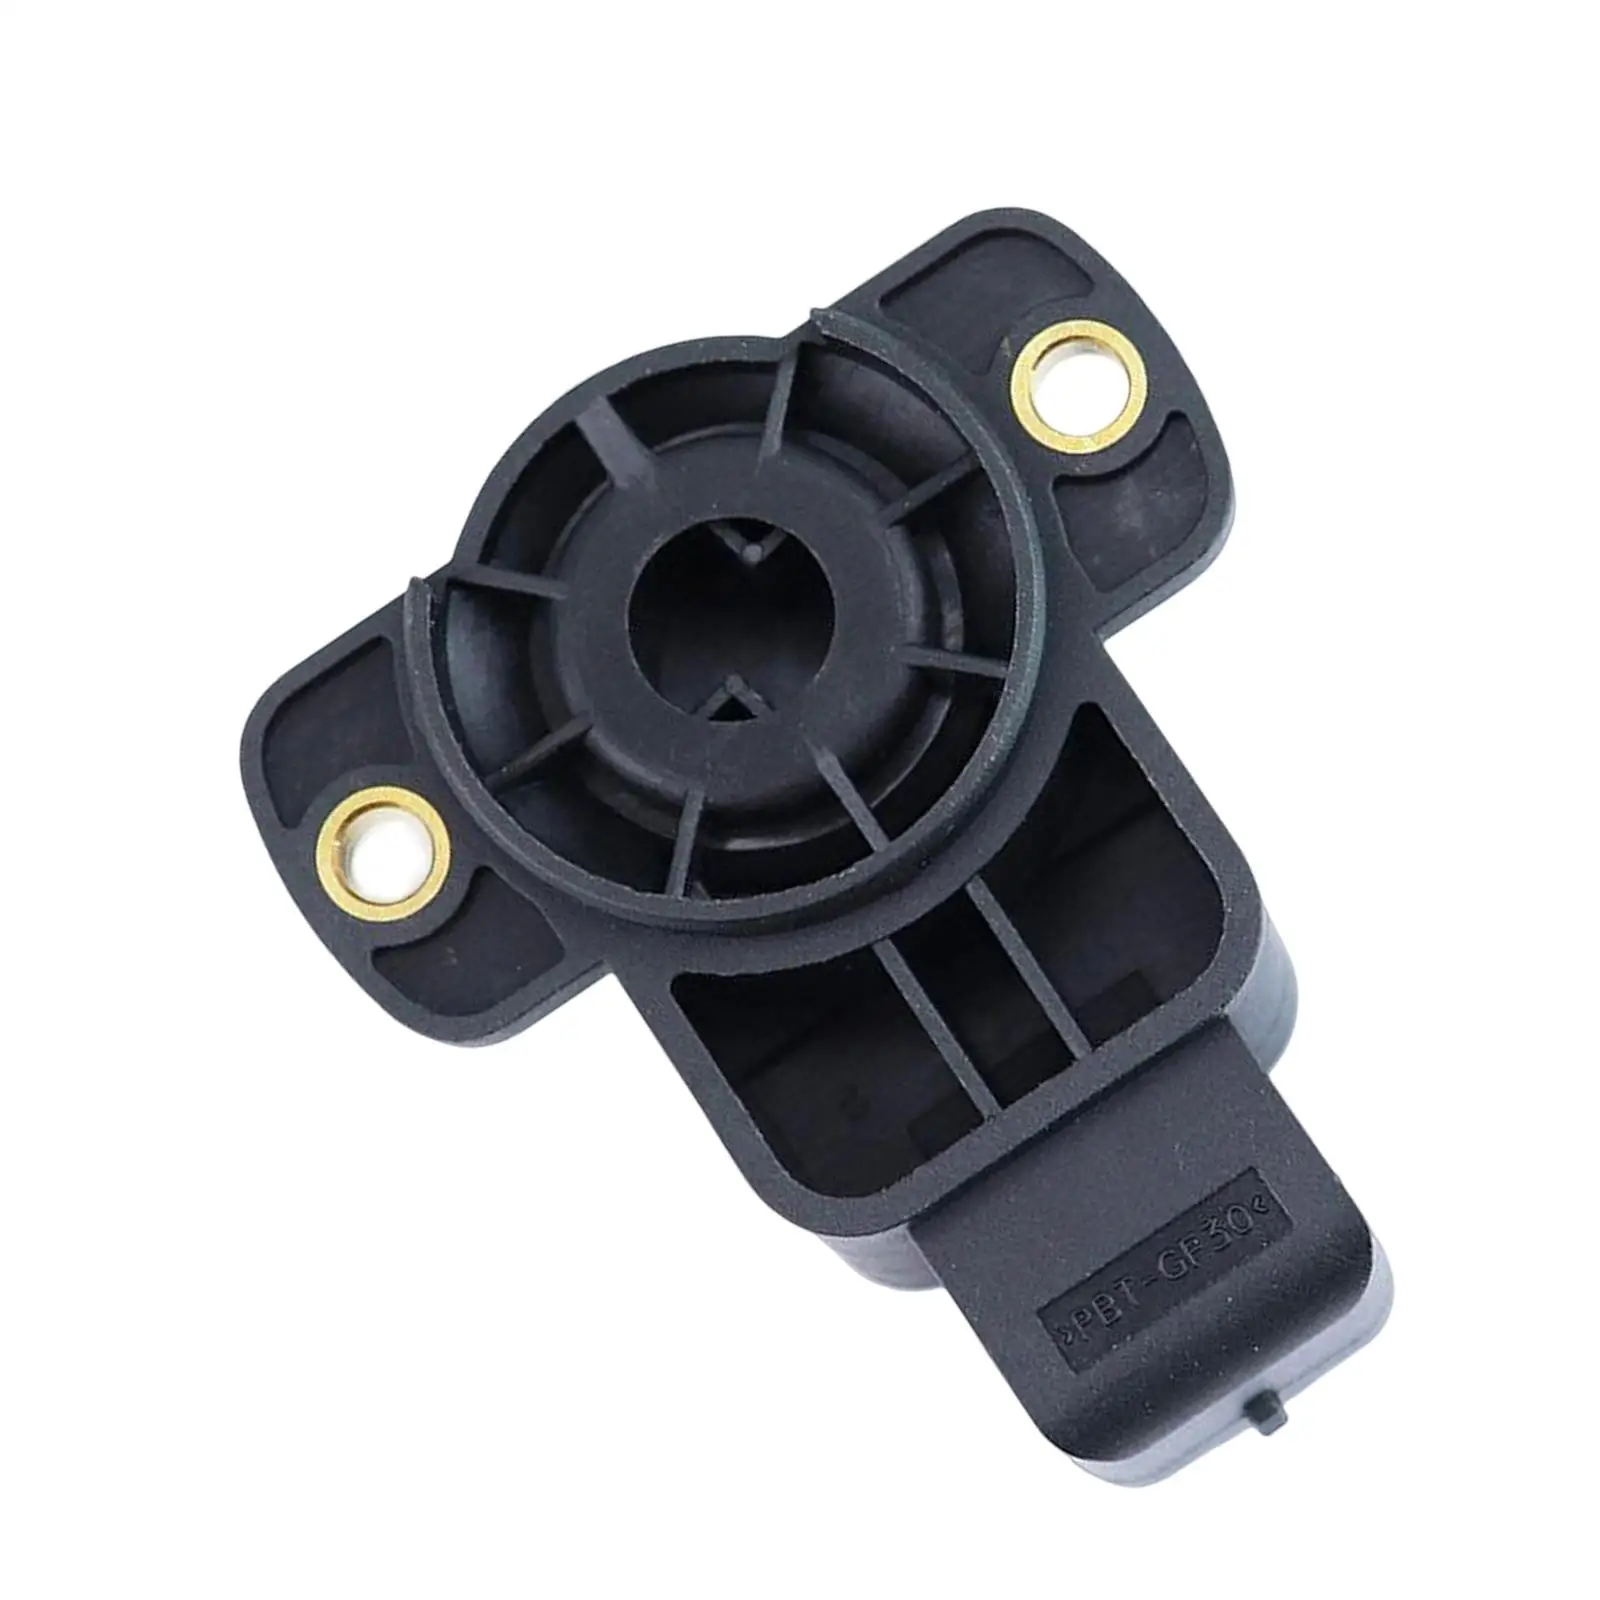 Throttle Position Sensor 9642473280 Fits for Berlingo Accessories Replaces